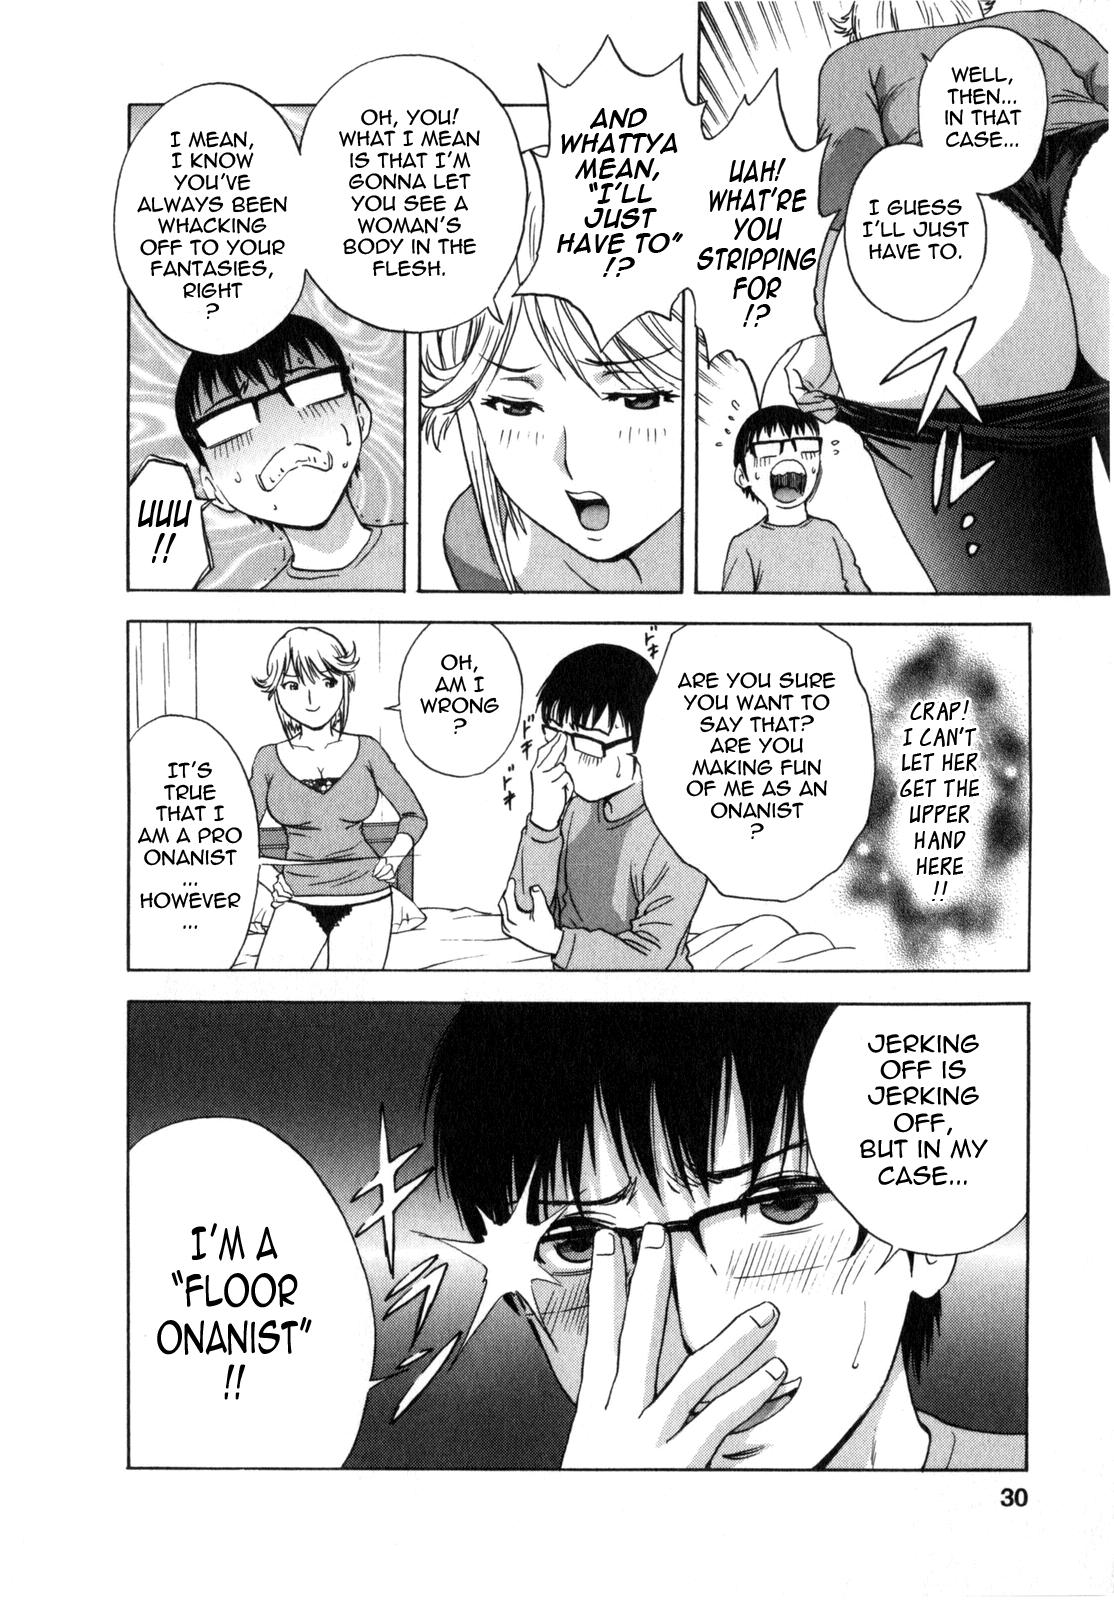 [Hidemaru] Life with Married Women Just Like a Manga 1 - Ch. 1-3 [English] {Tadanohito} 31